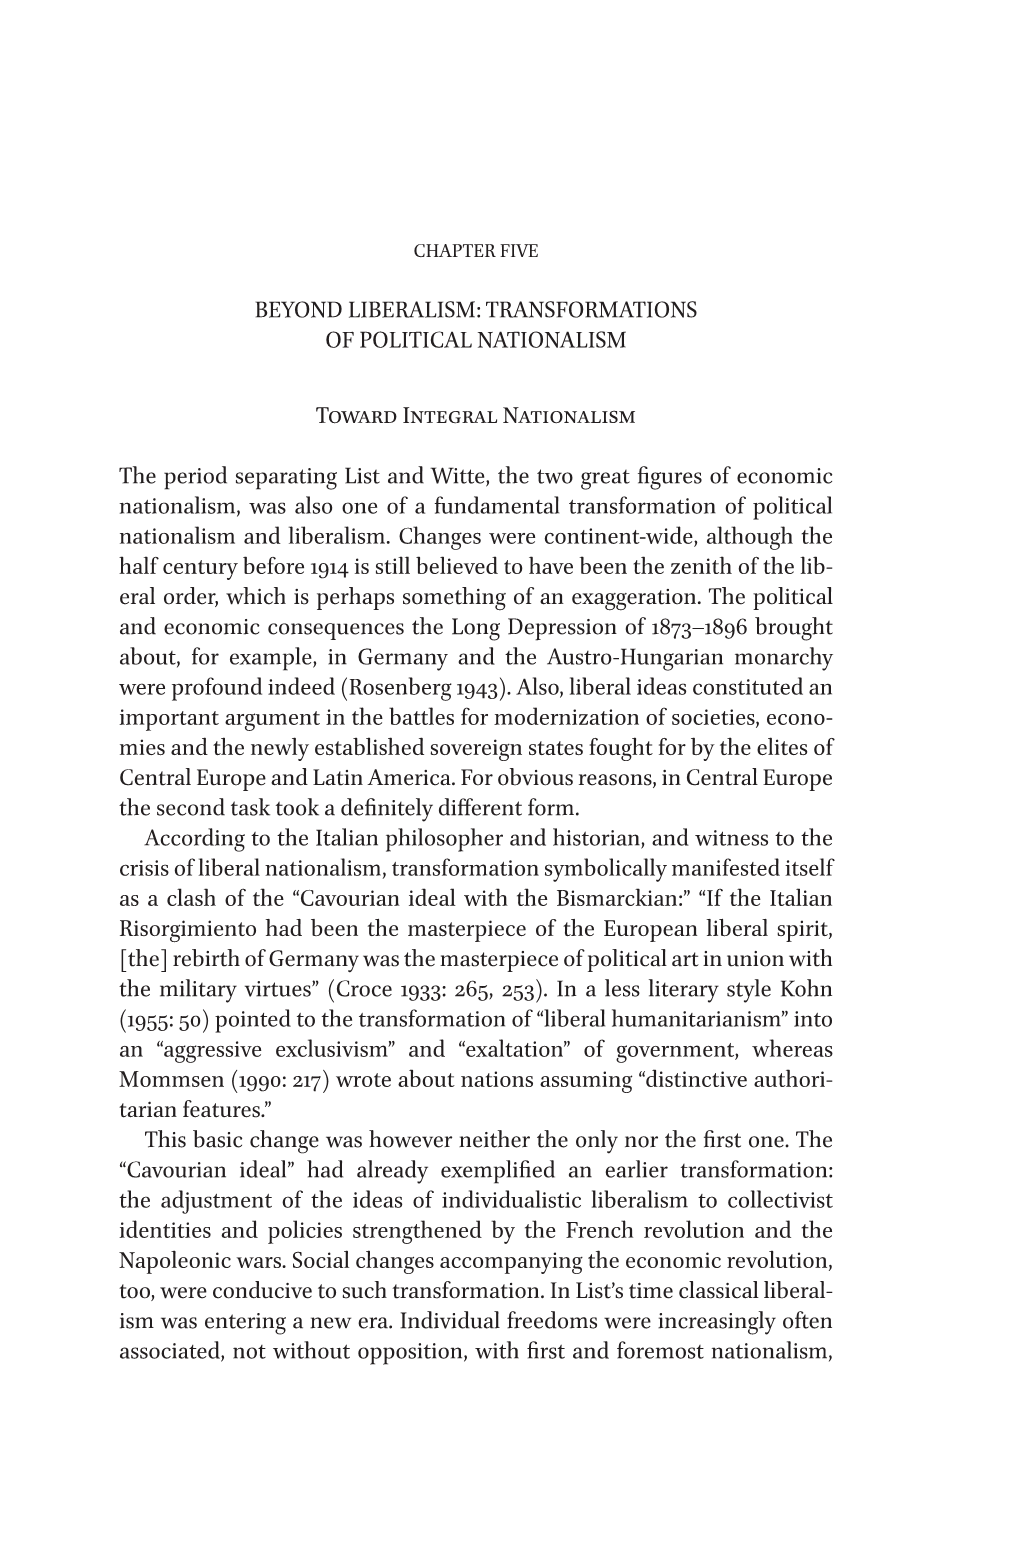 Beyond Liberalism: Transformations of Political Nationalism